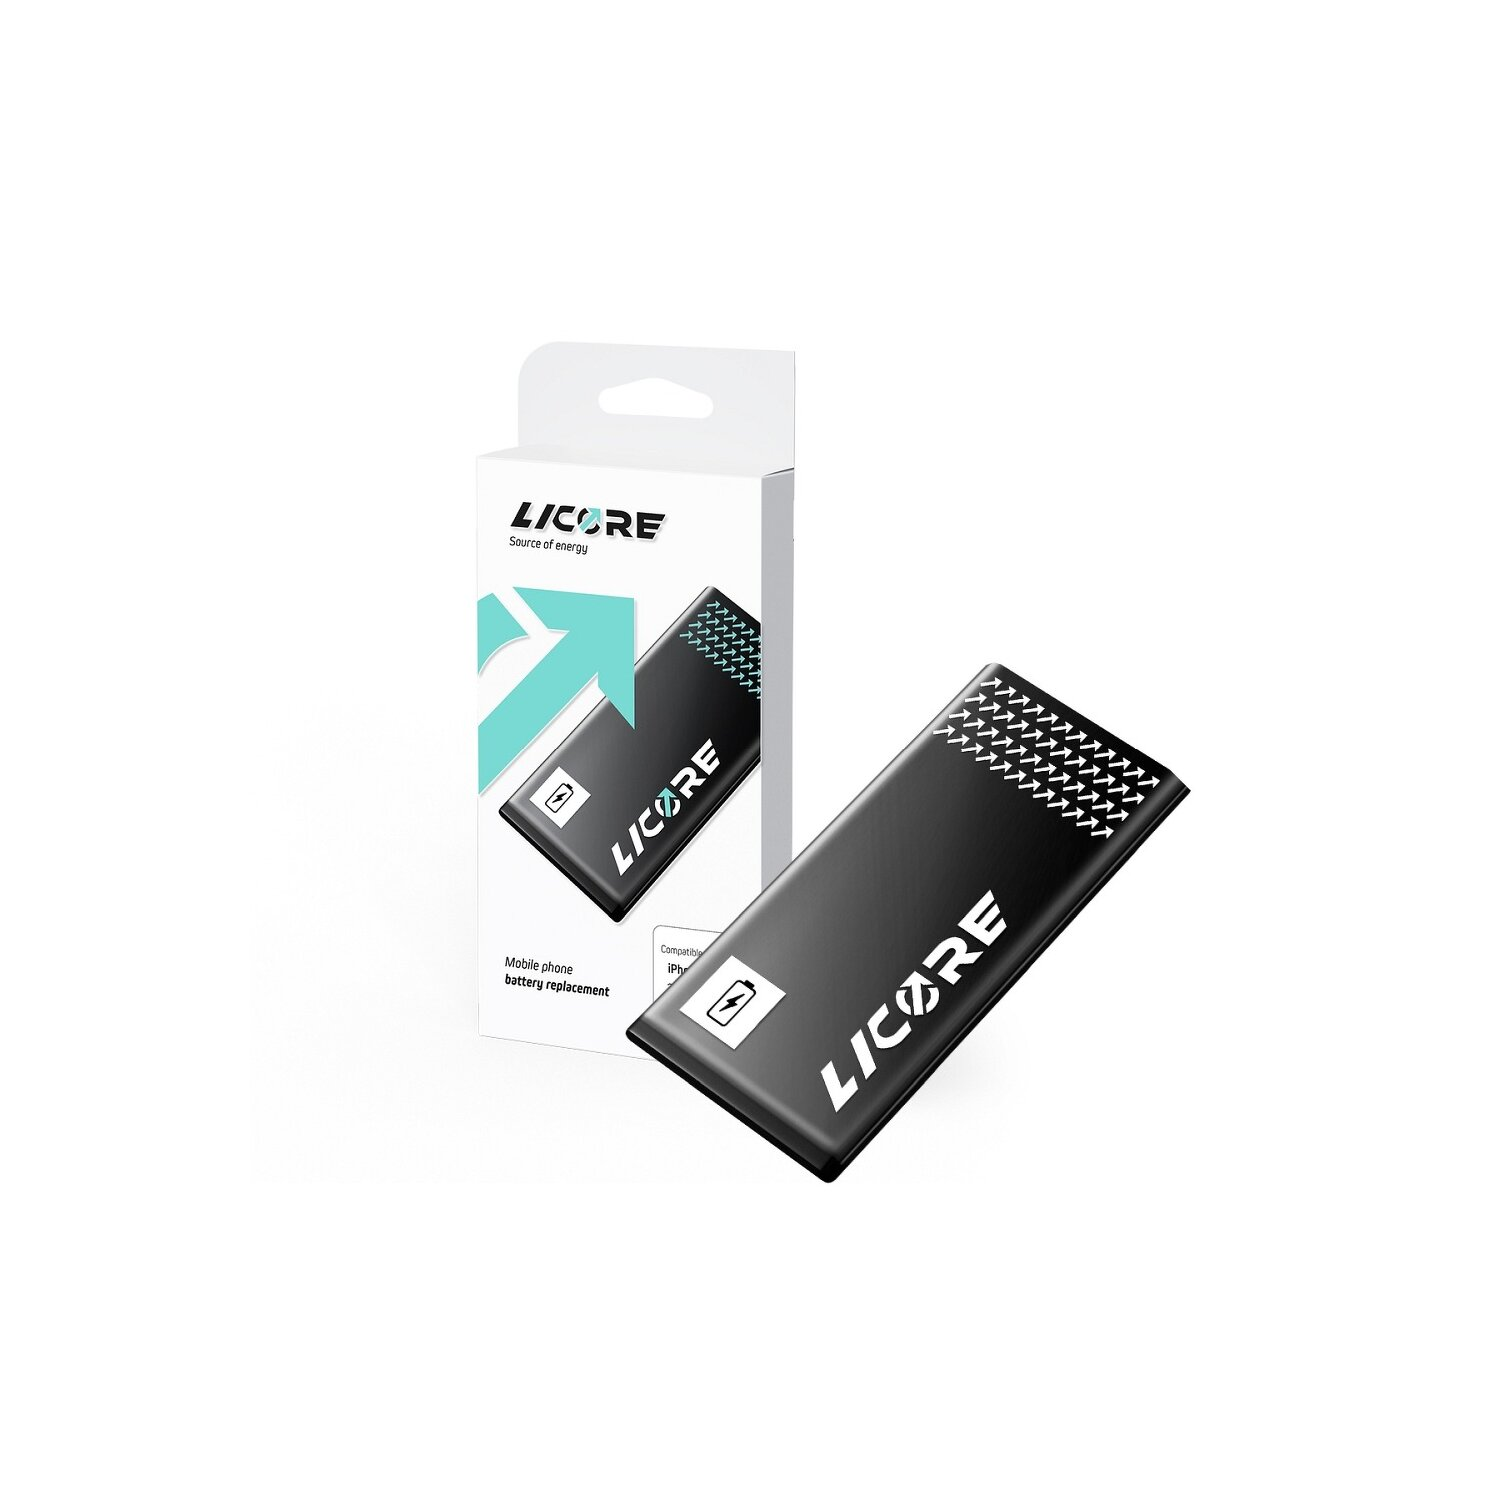 Licore 7 COFI iPhone Akku Ersatz mit Akku li-Ion kompatibel 1960mAh